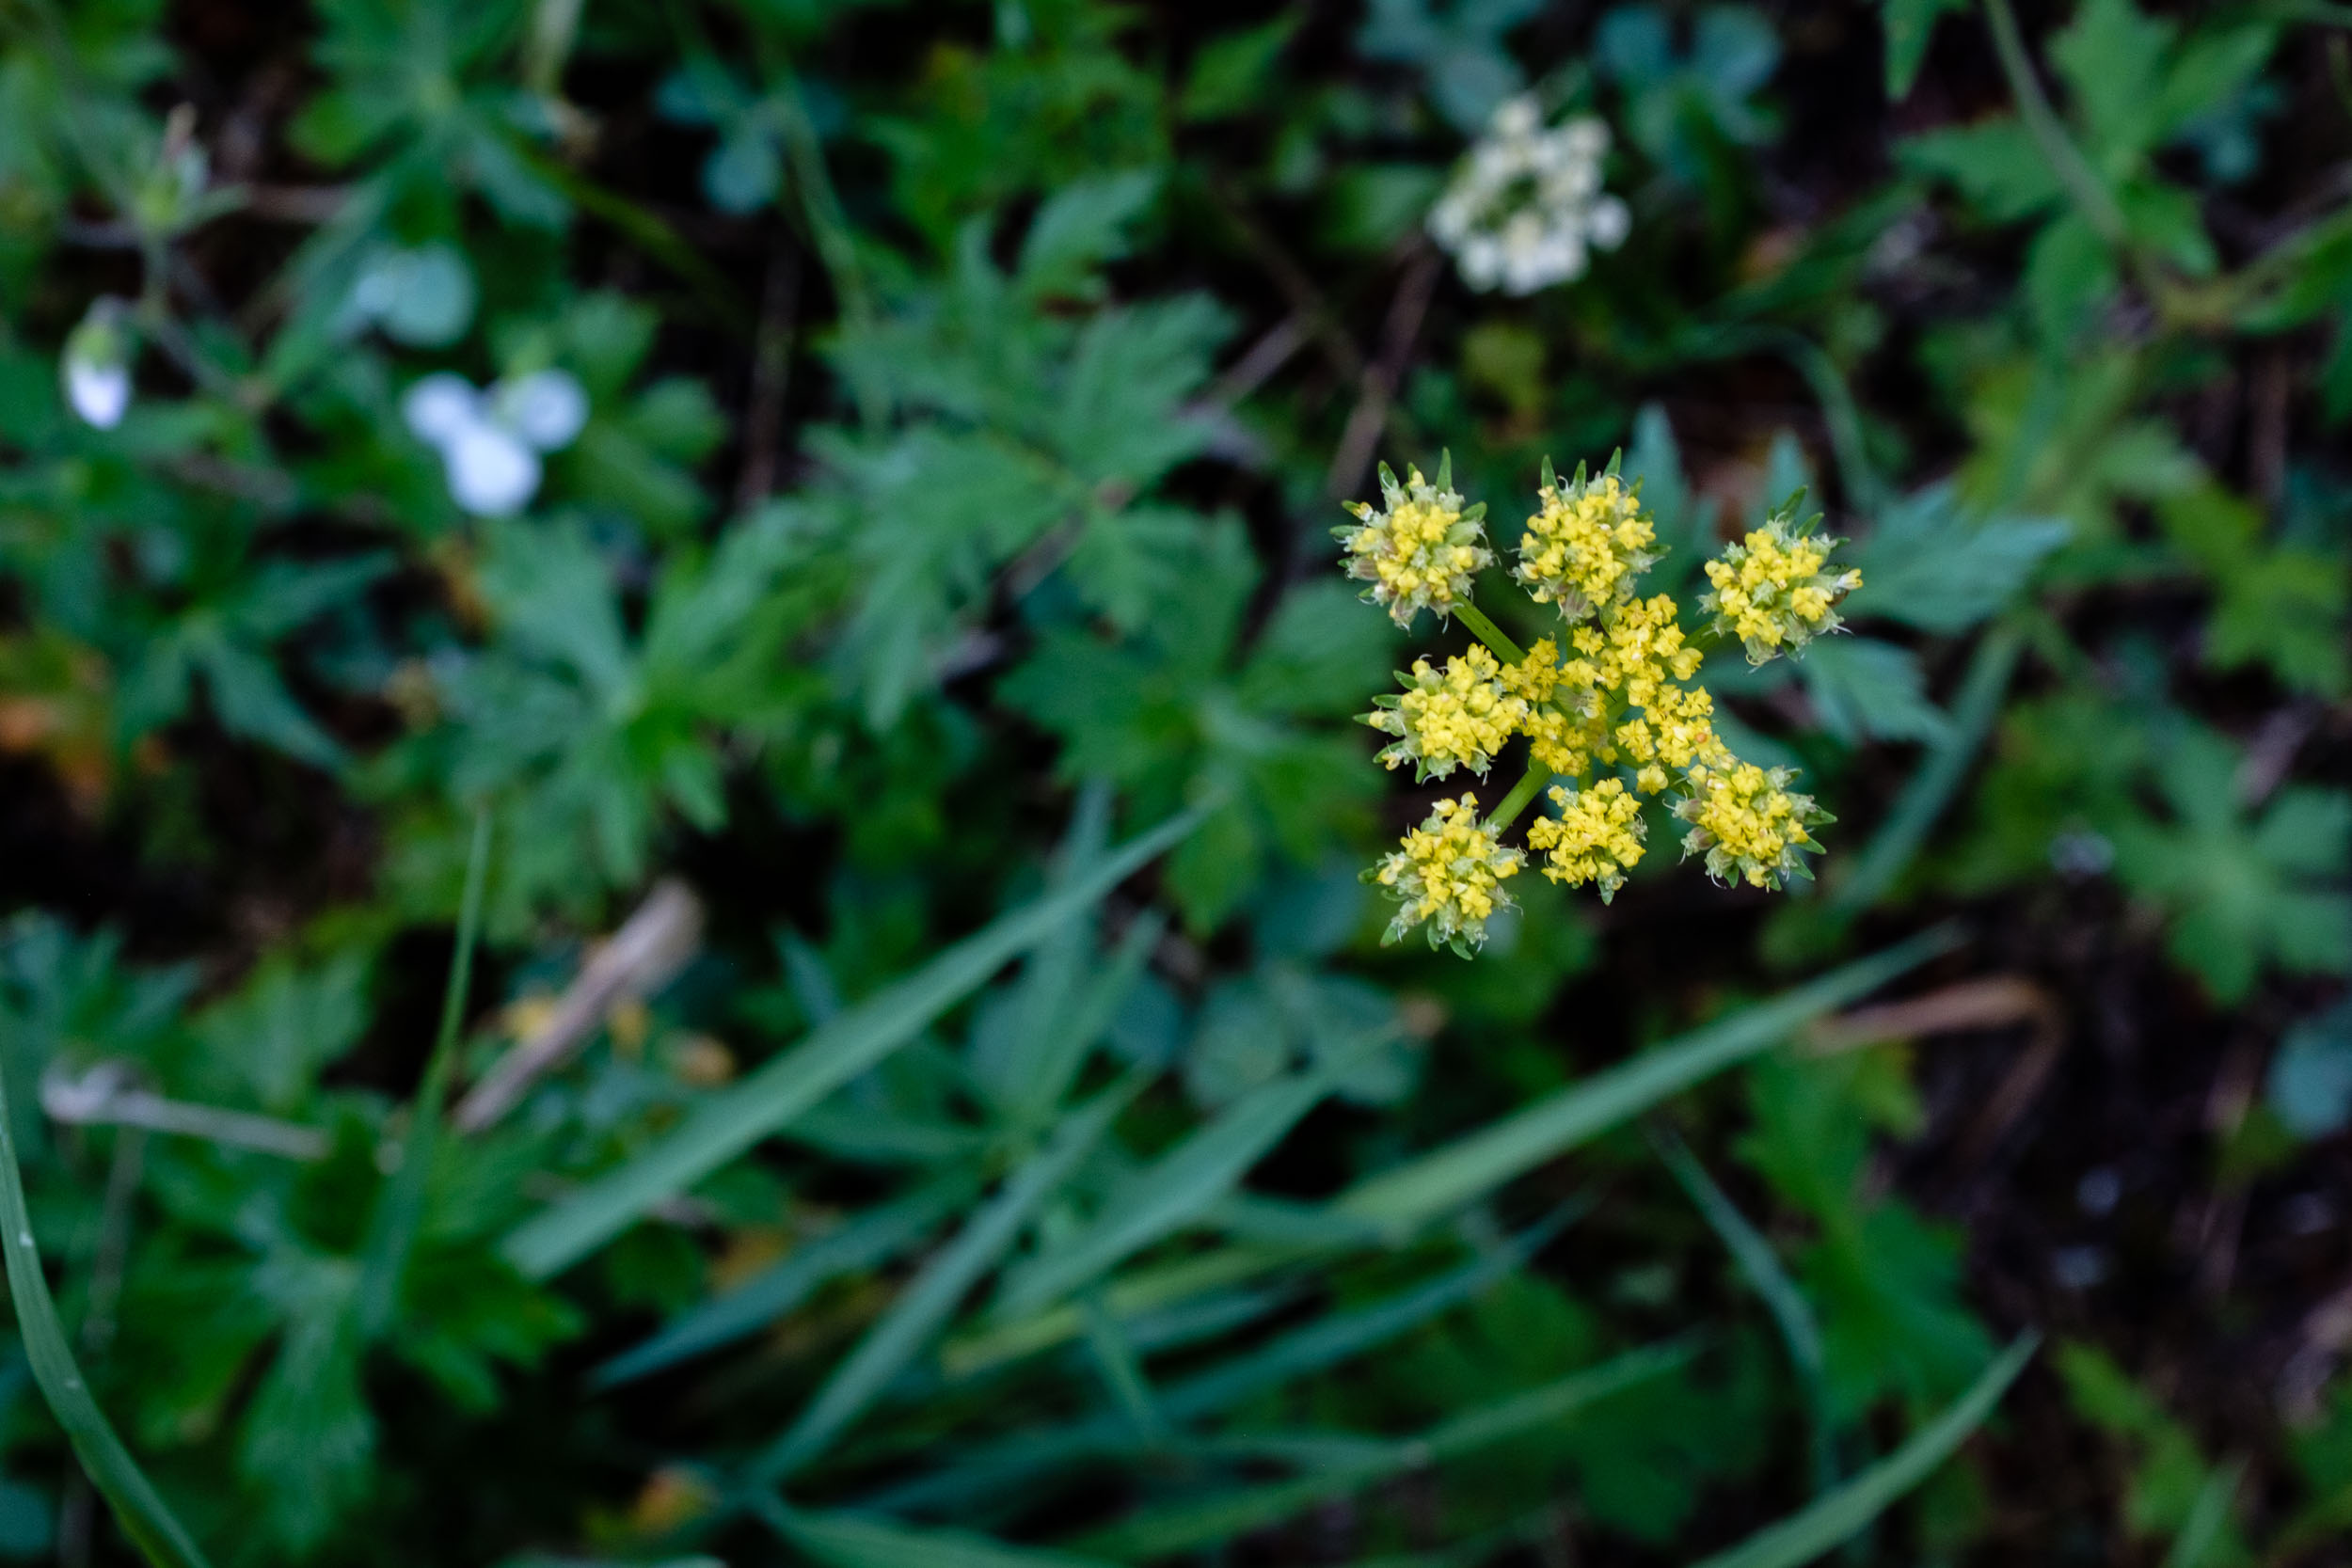  Delicate Yellow Blooms - Fuji XT2, 23mm f/2 